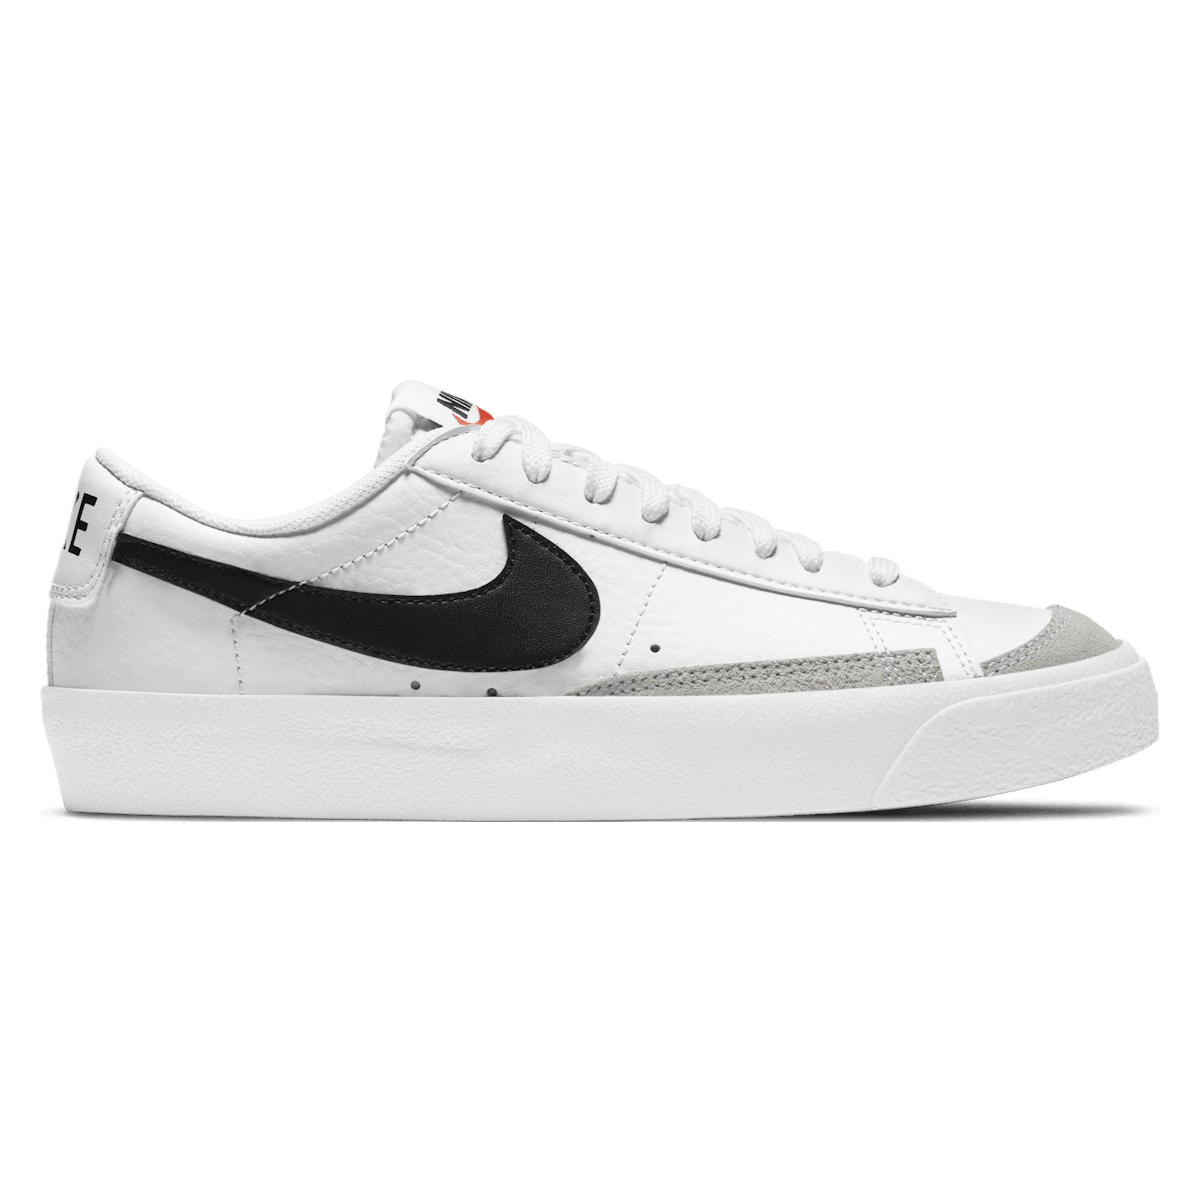 Nike Blazer Low 77 Vintage White Black (GS)